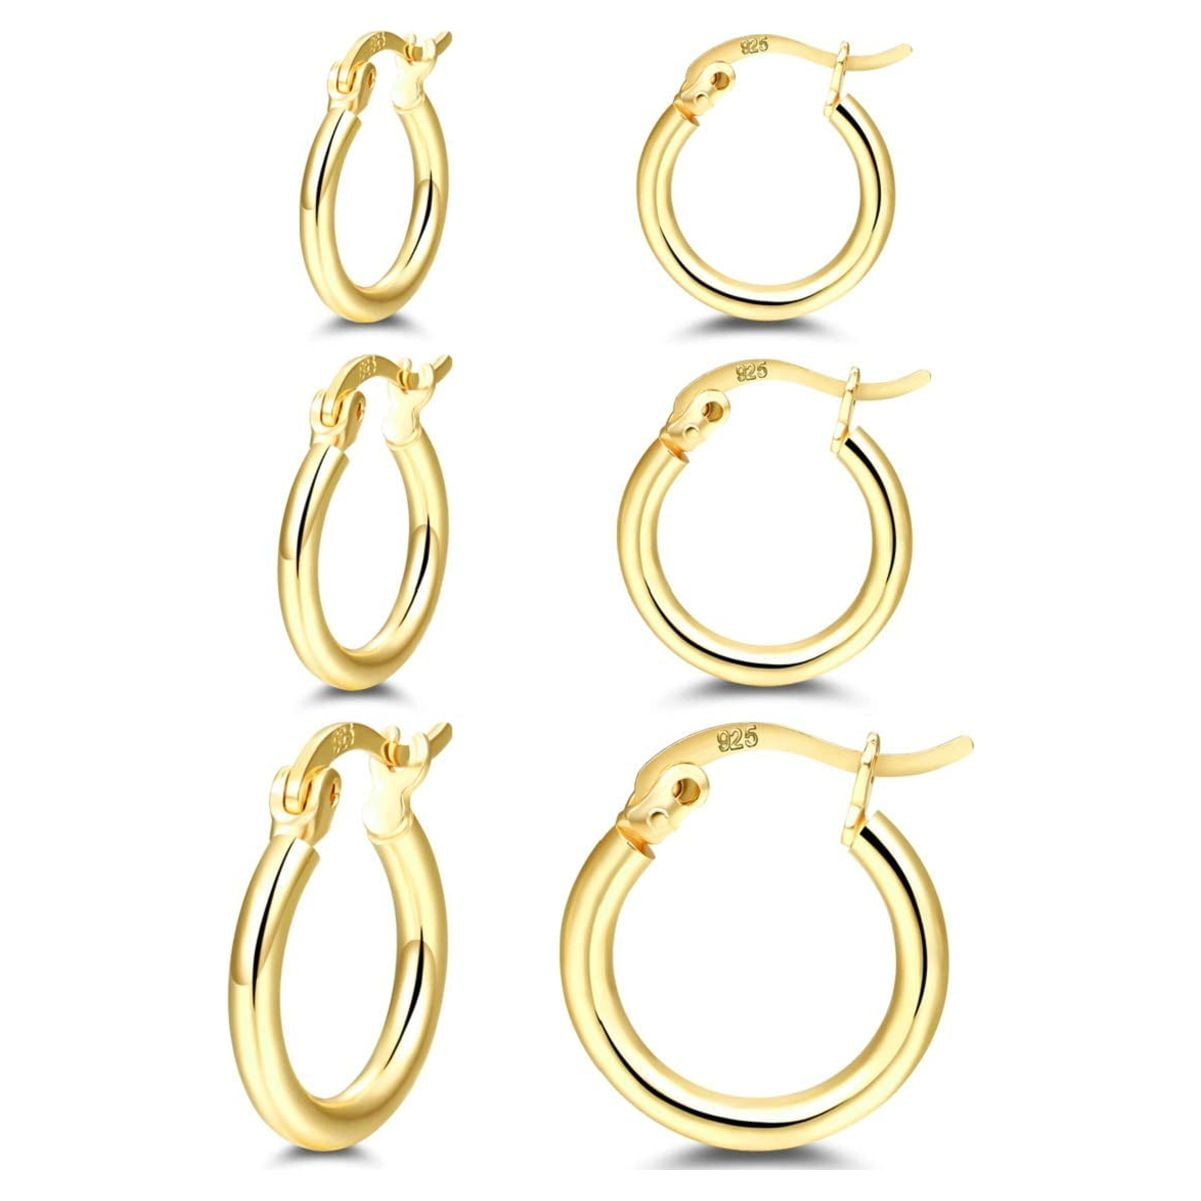 14K Gold Plated Hoop Earrings - 3 Pairs Sterling Silver Post Small Hoops  Gold Hoop Earrings Sets for Women Girls (13mm 15mm 20mm) 